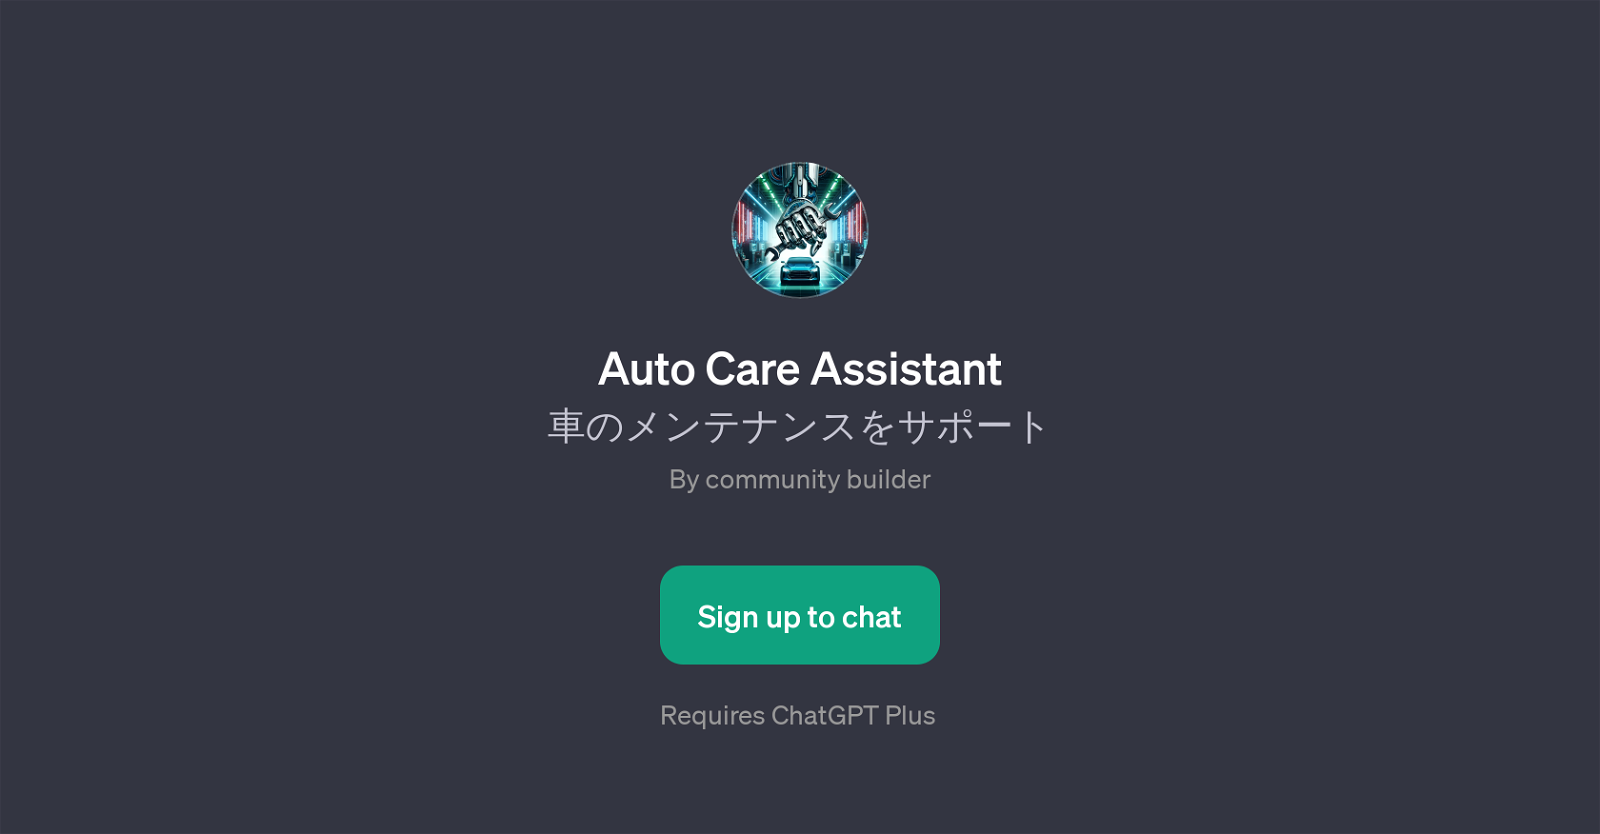 Auto Care Assistant website